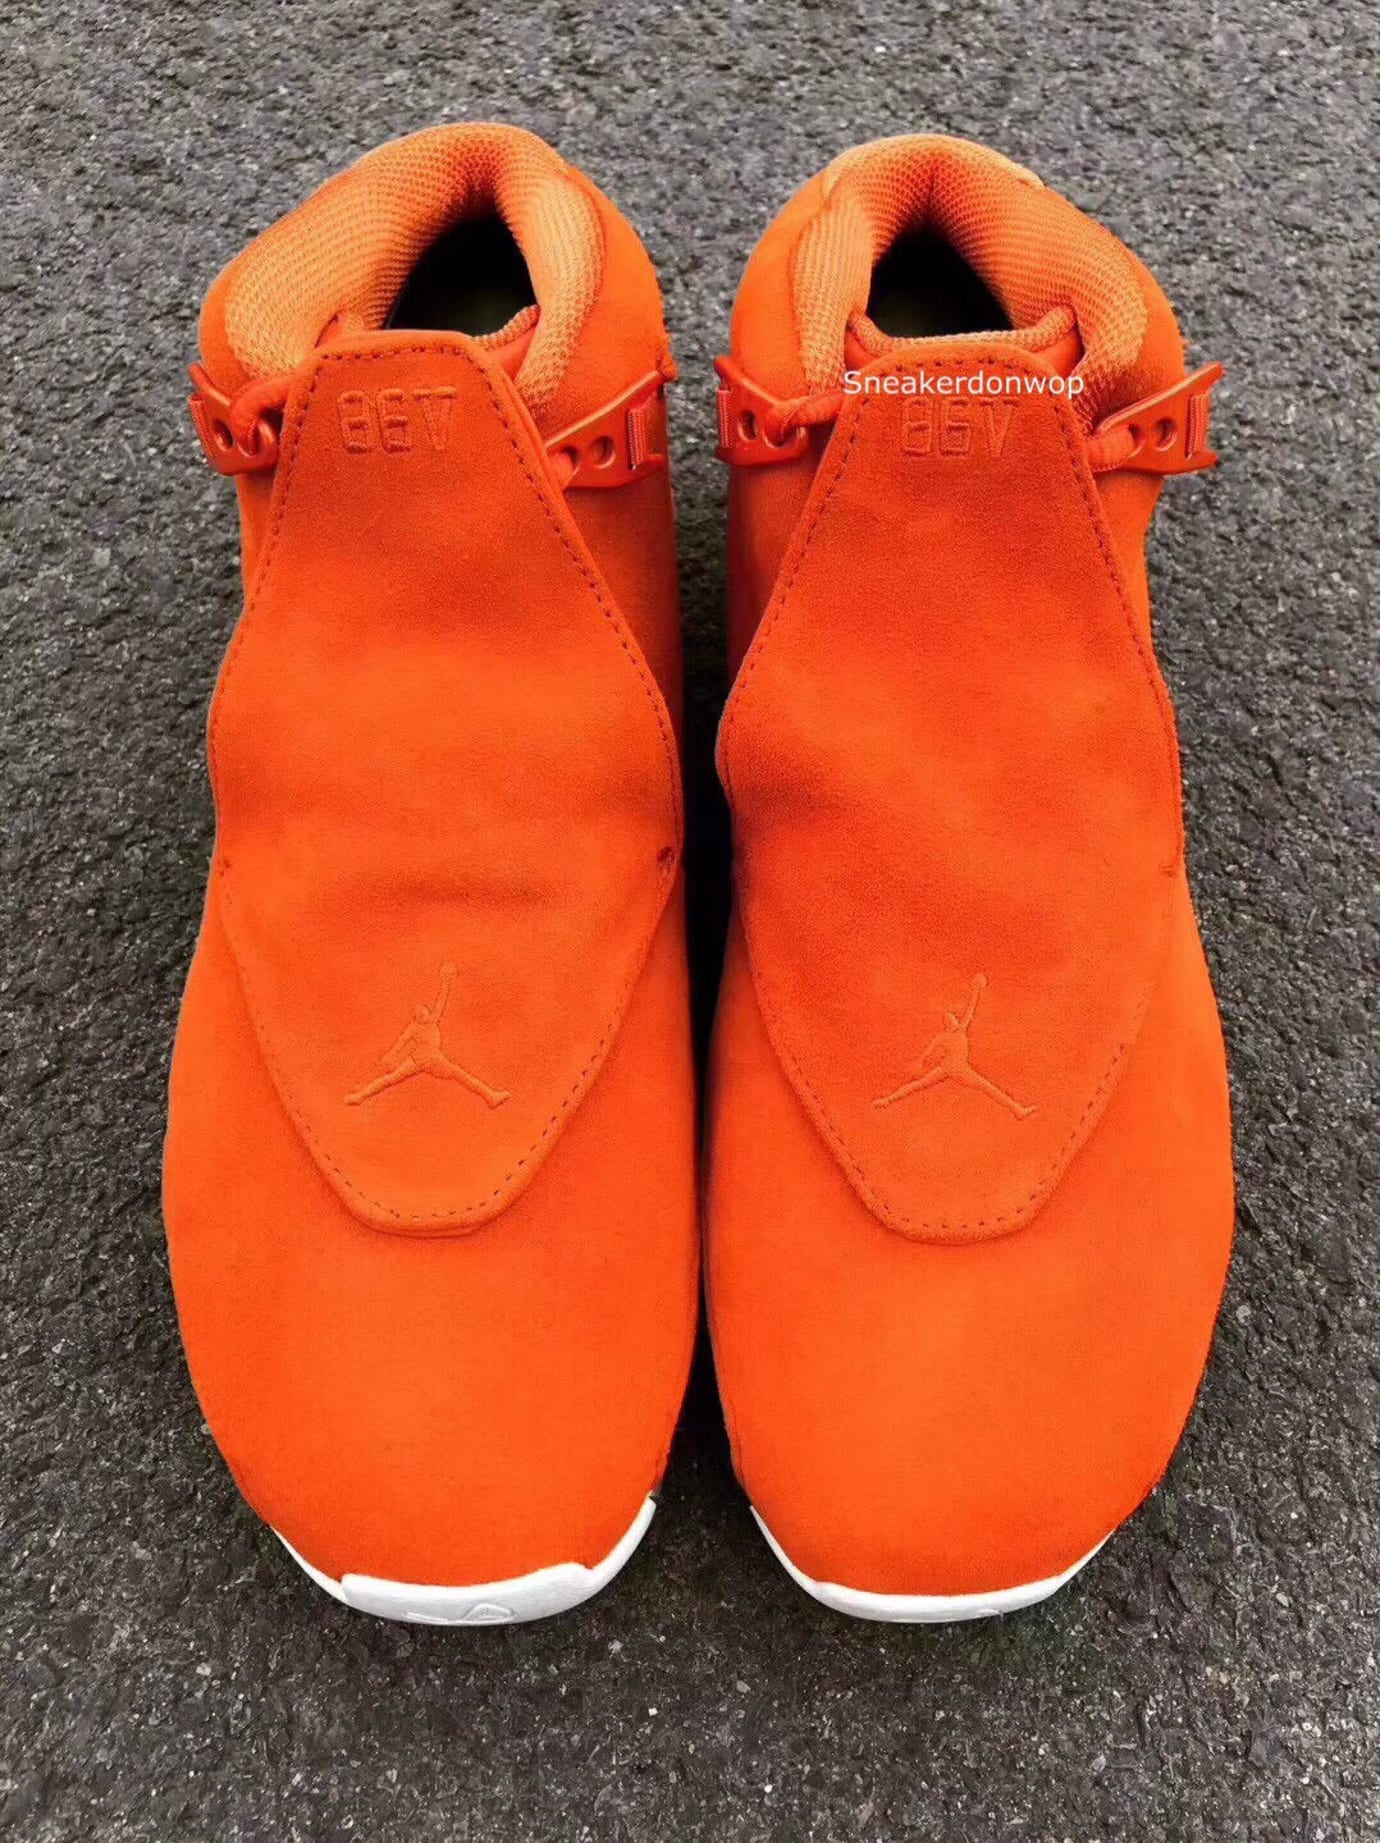 jordan 18 orange on feet